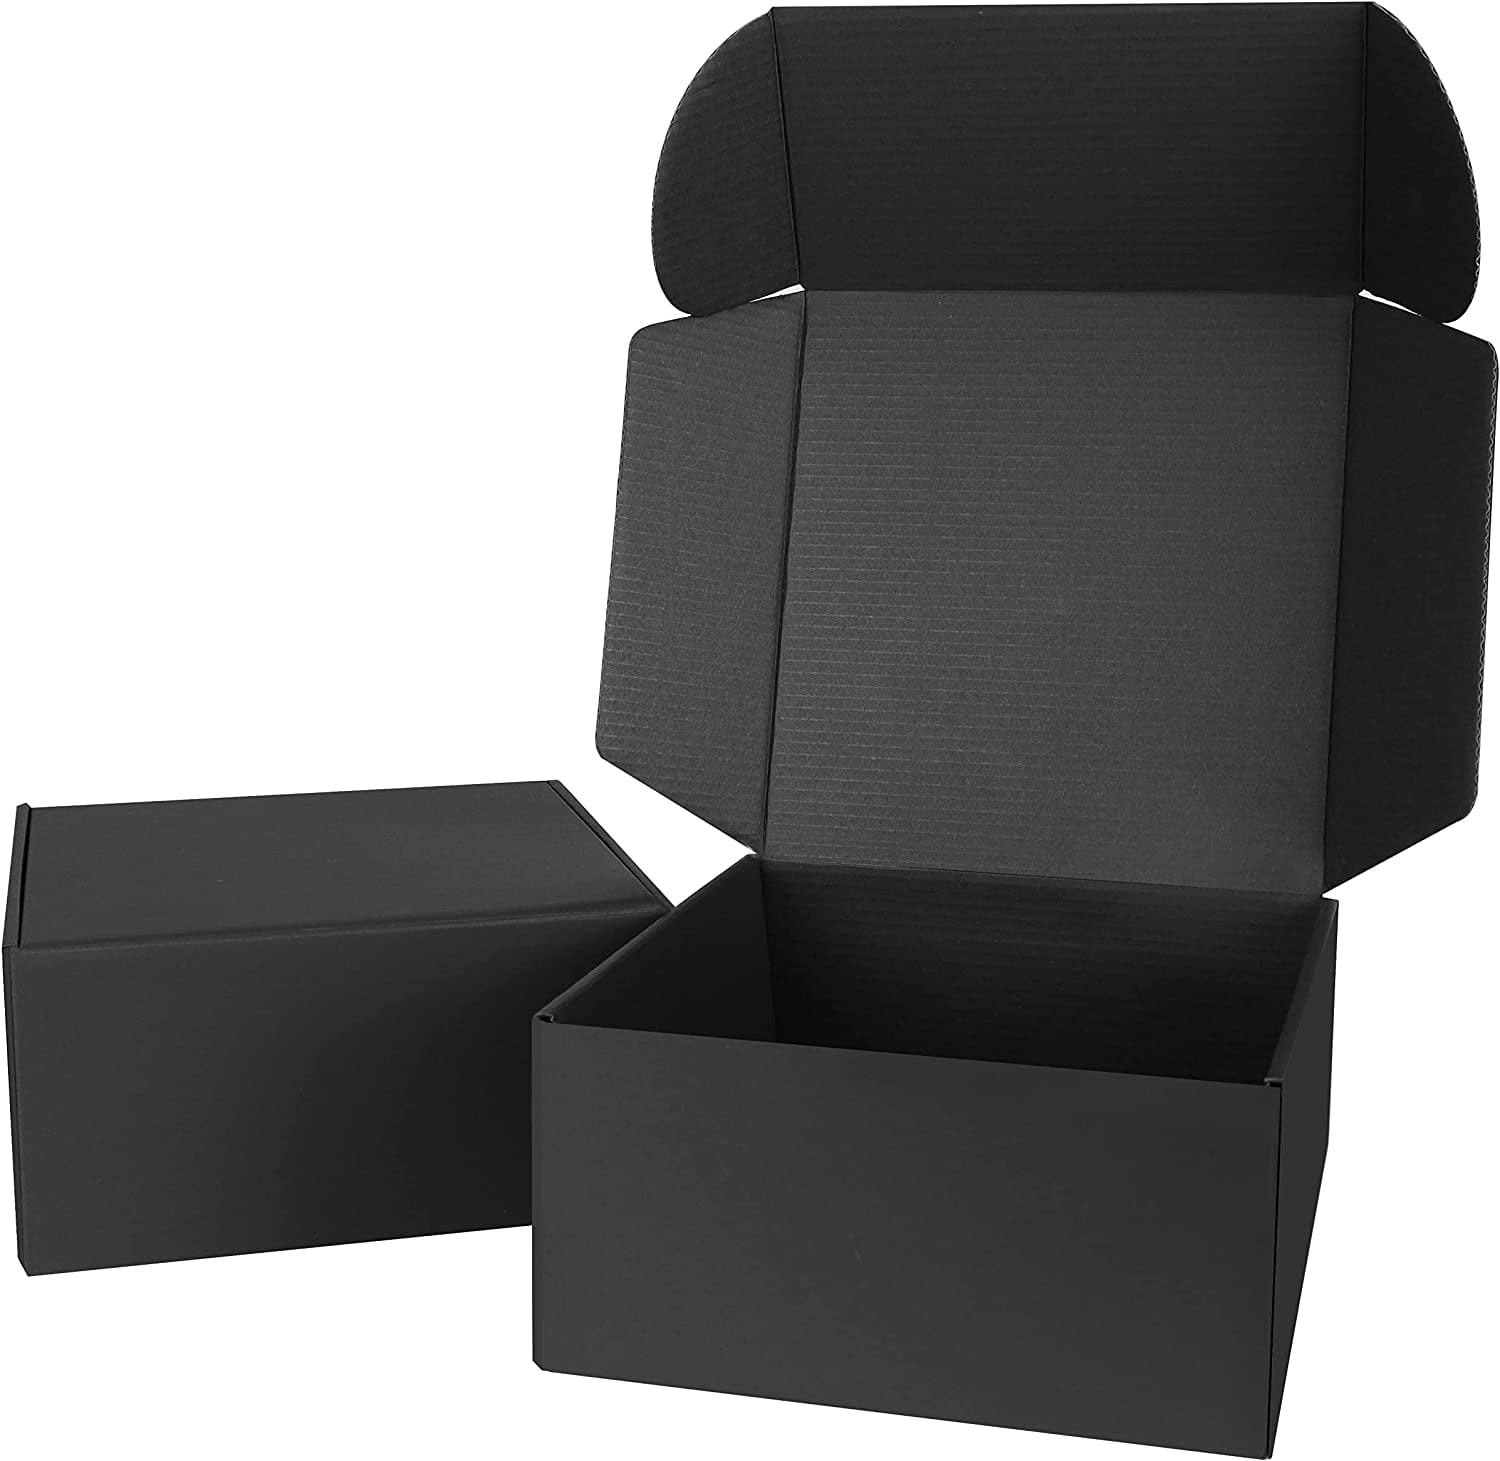 Black Matte Gift Box - A1, Stationery, Clear Window [WMBG10]